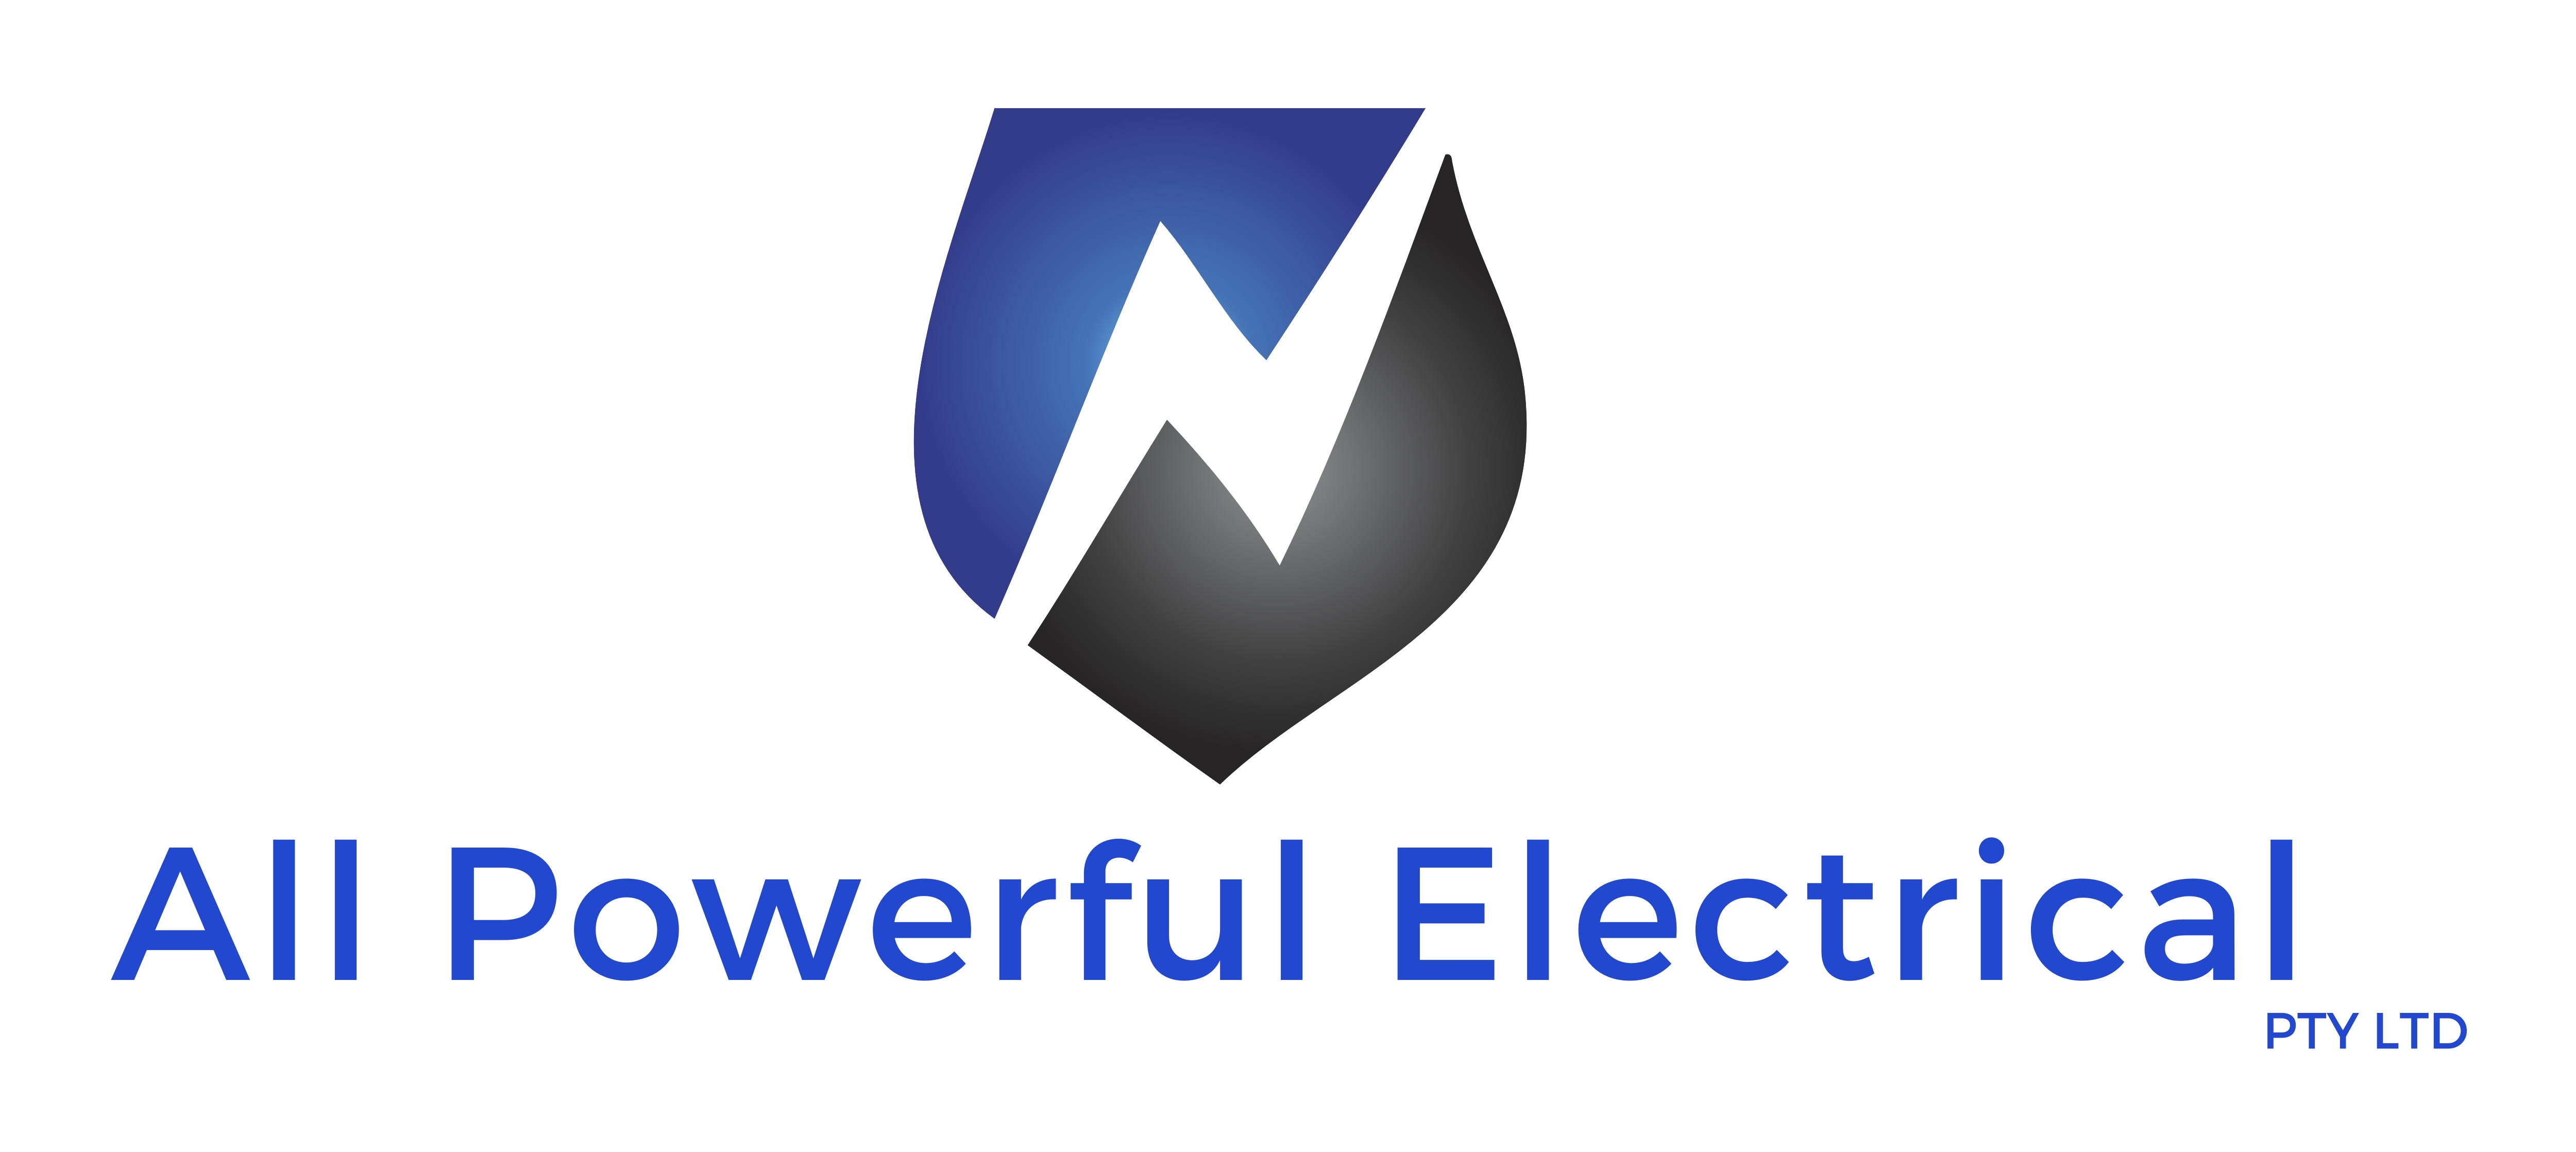 All Powerful Electrical Pty Ltd